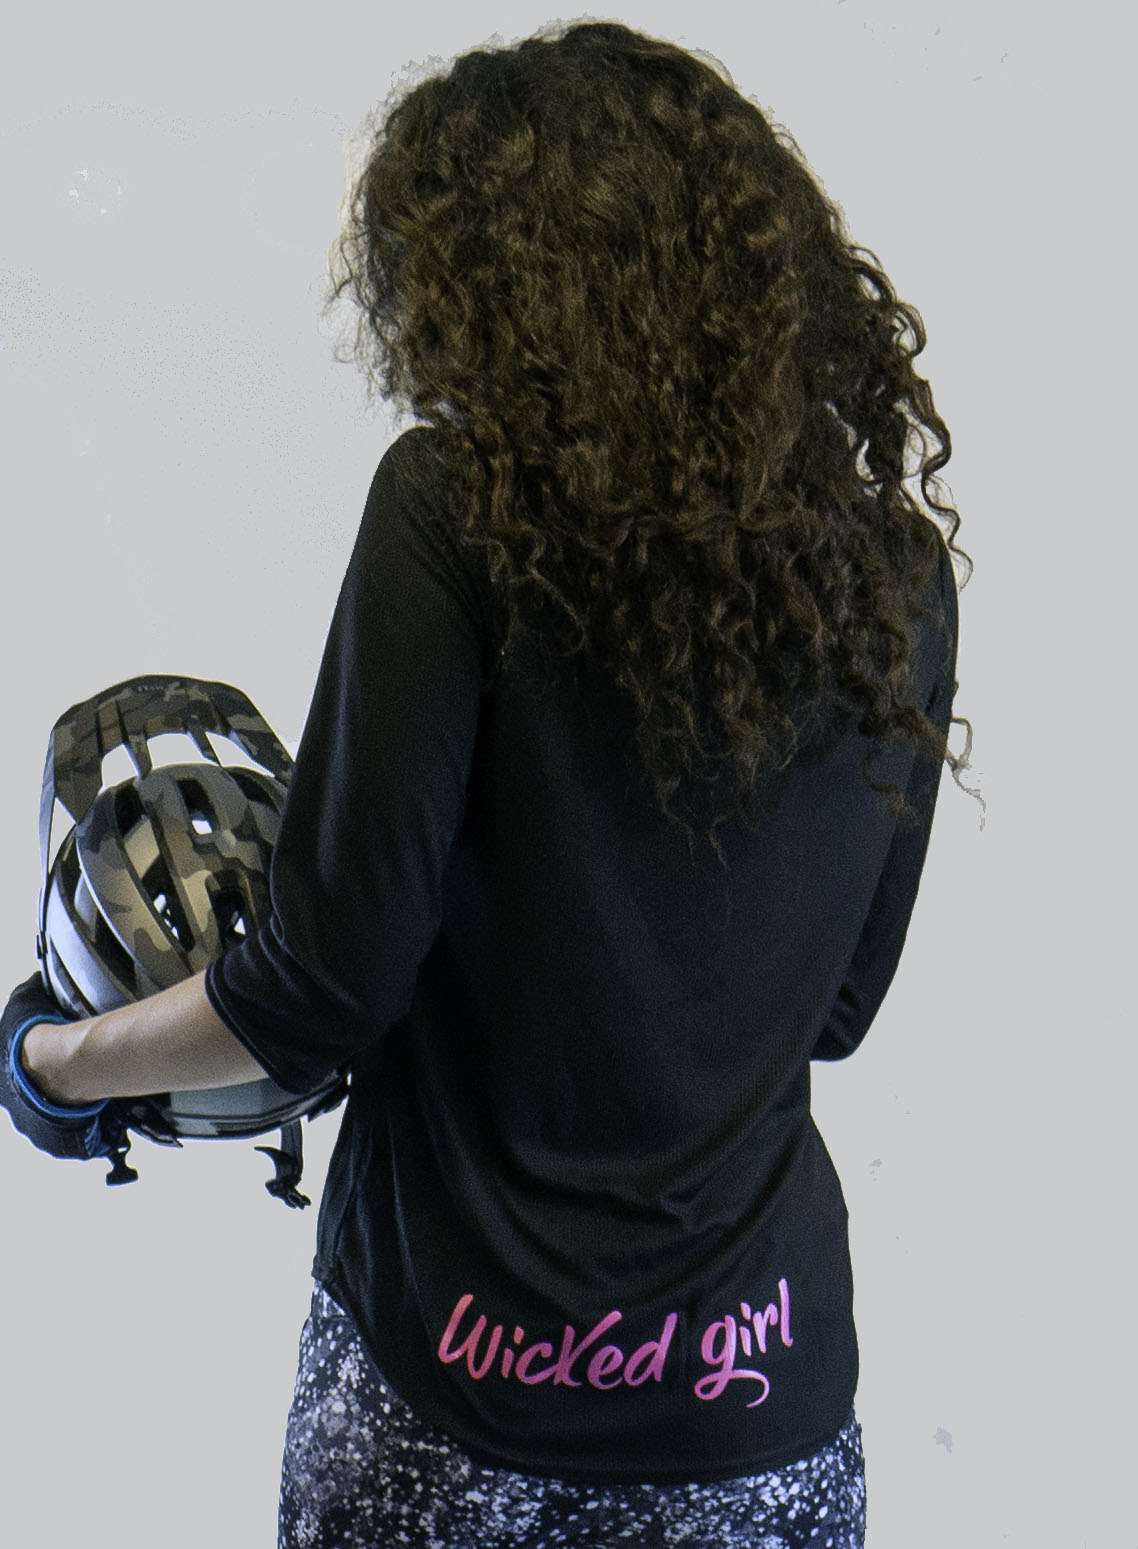 Enduro Jersey Wicked Girl logo - Moxie Cycling